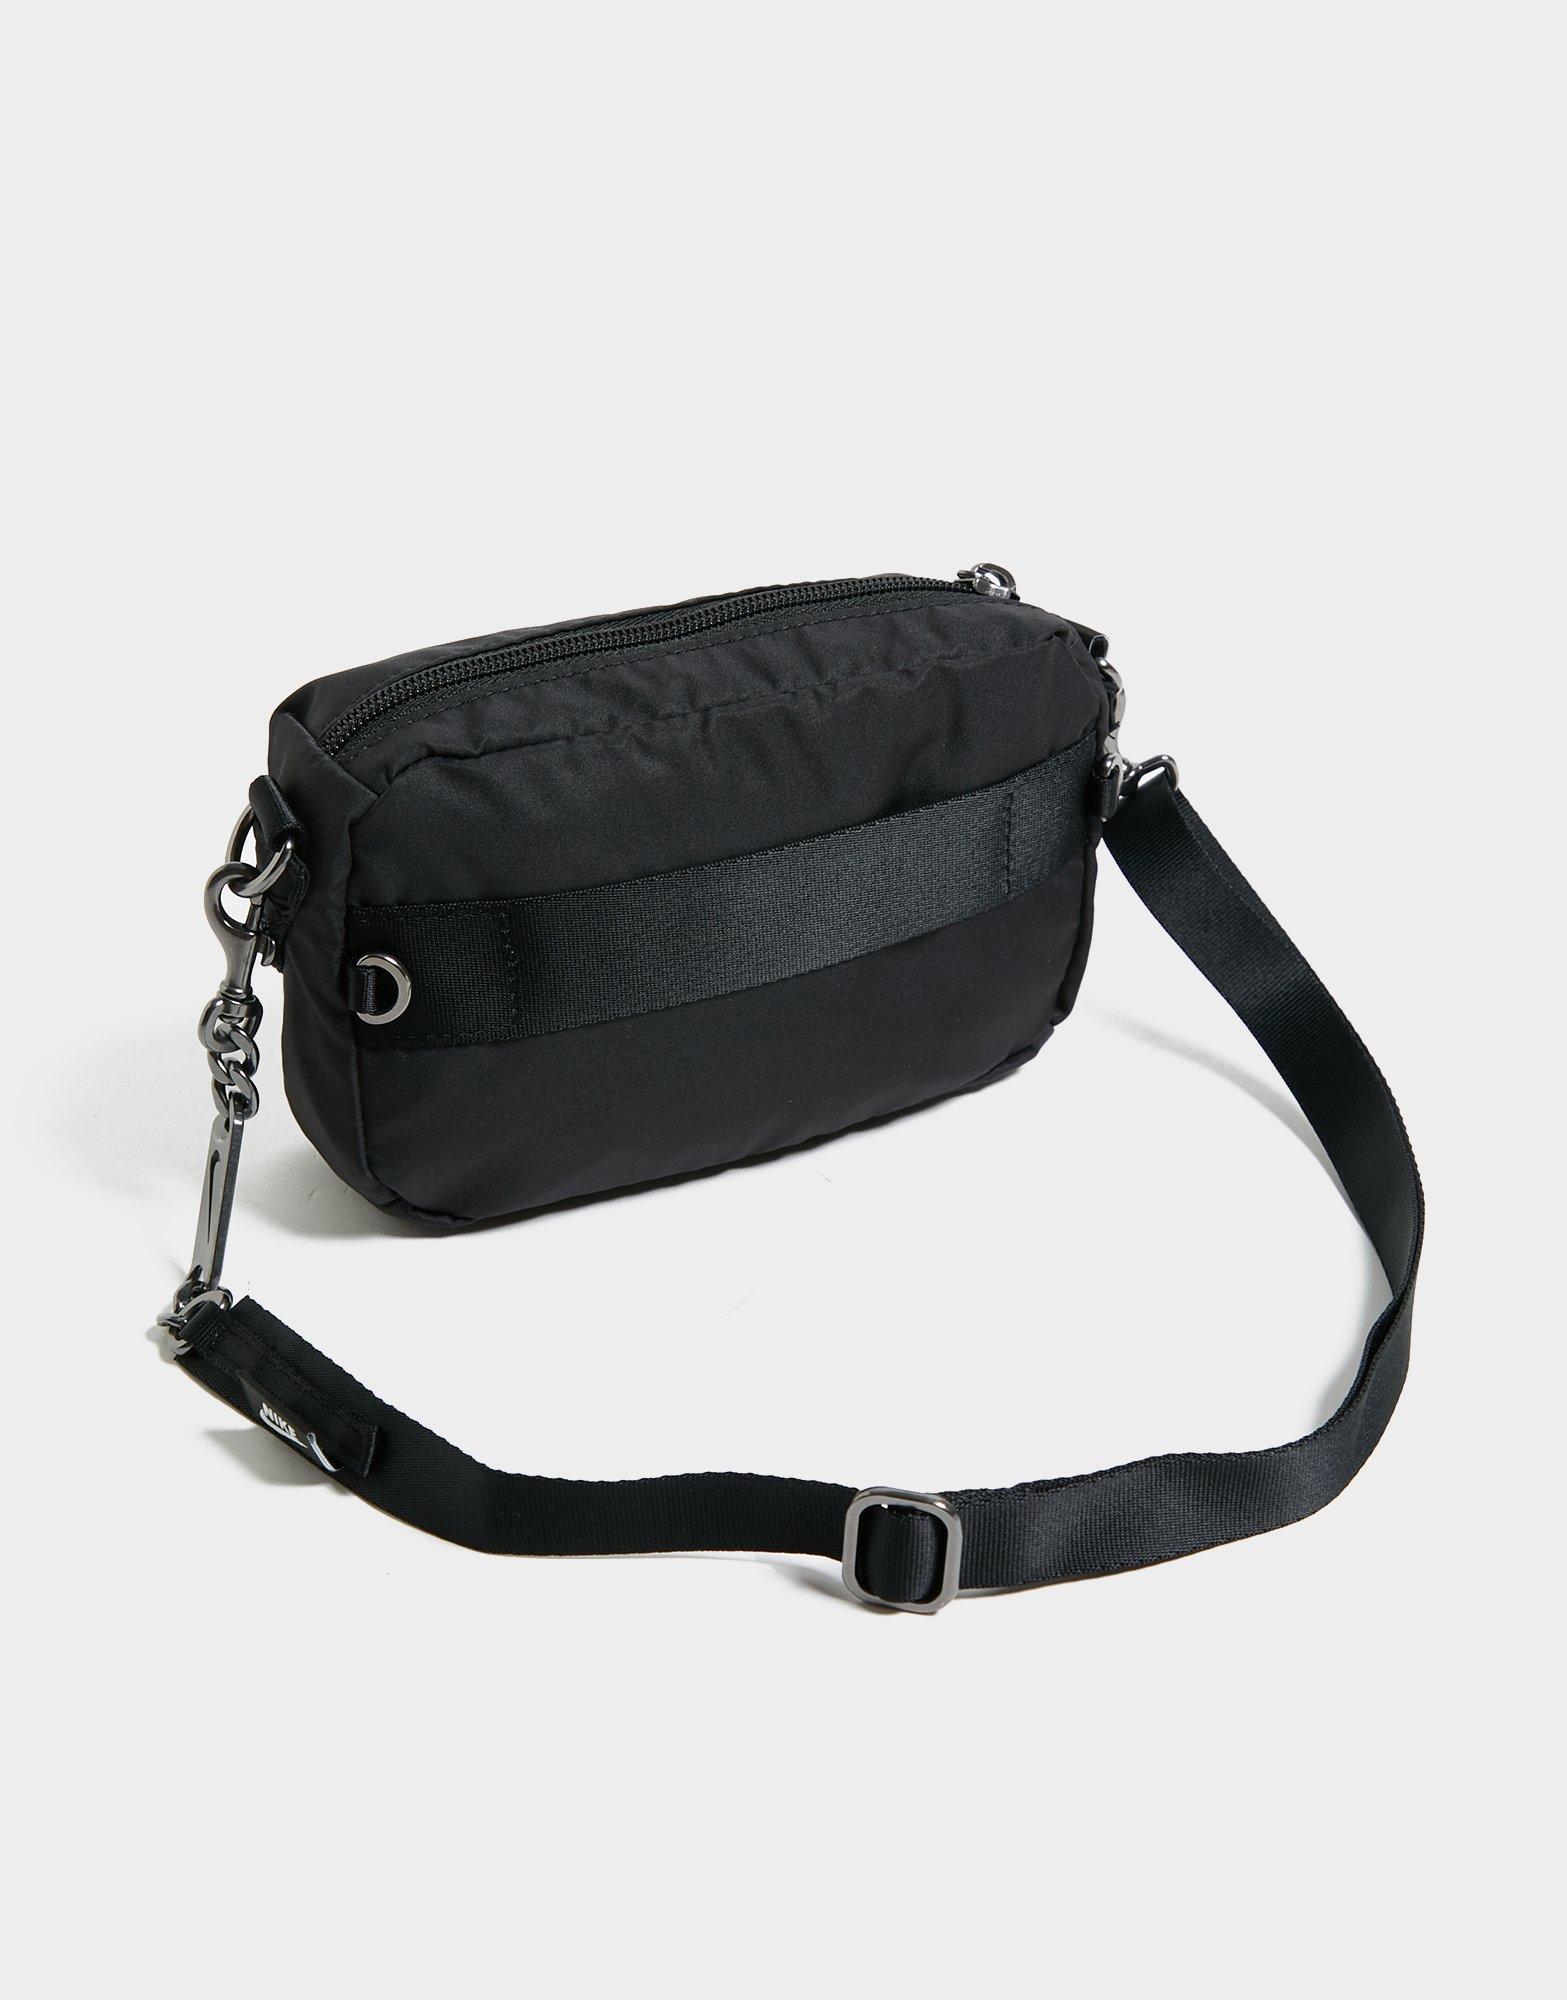 Nike WMNS Futura Luxe Crossbody Bag (1L) White - COCONUT MILK/COCONUT  MILK/DK DRIFTWOOD